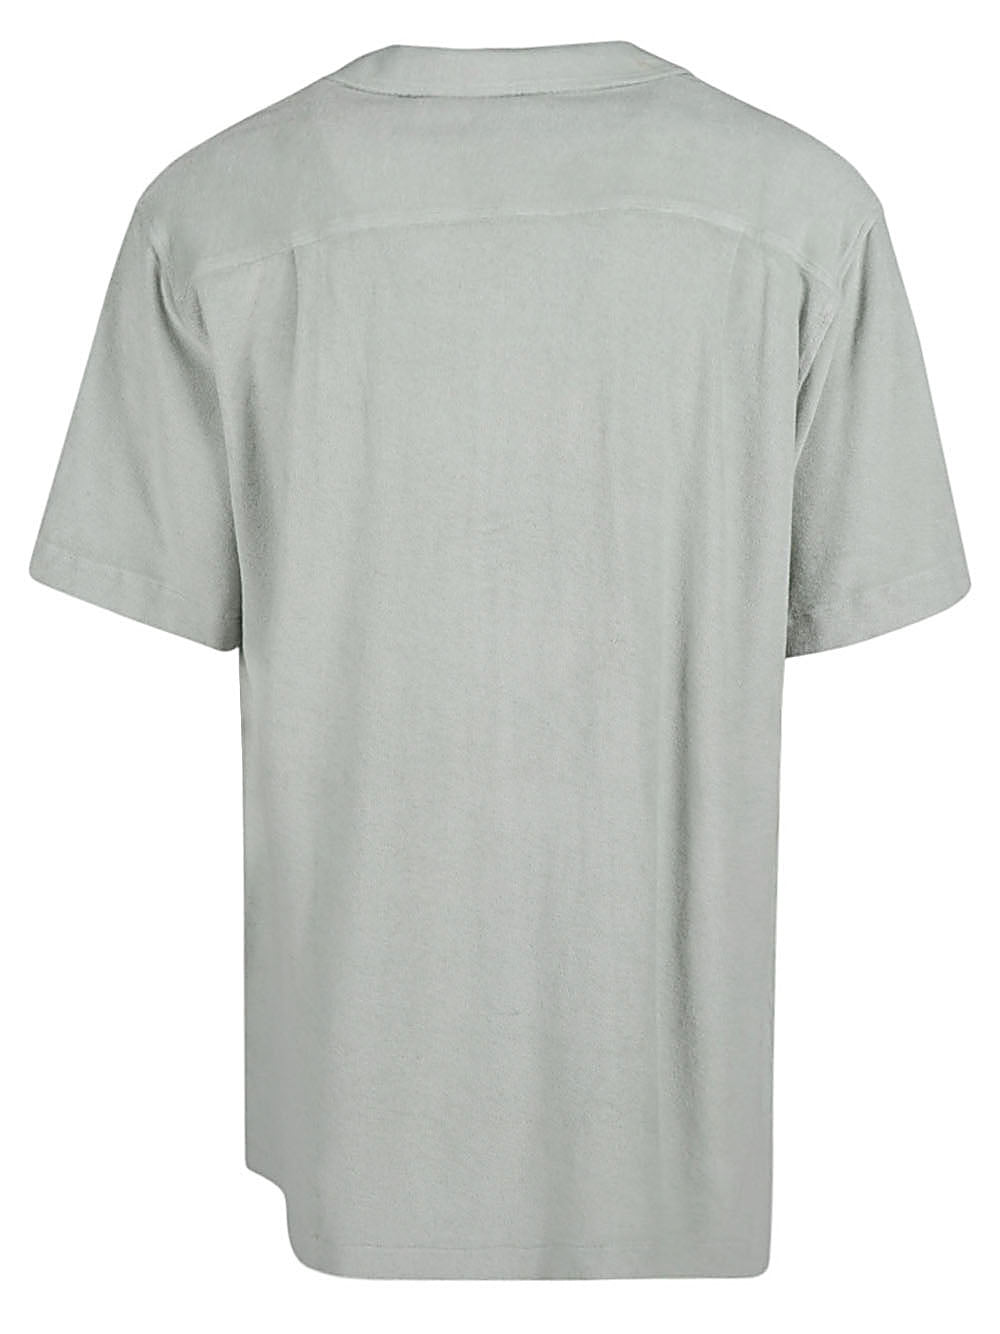 Edmmond Studios Shirts Grey